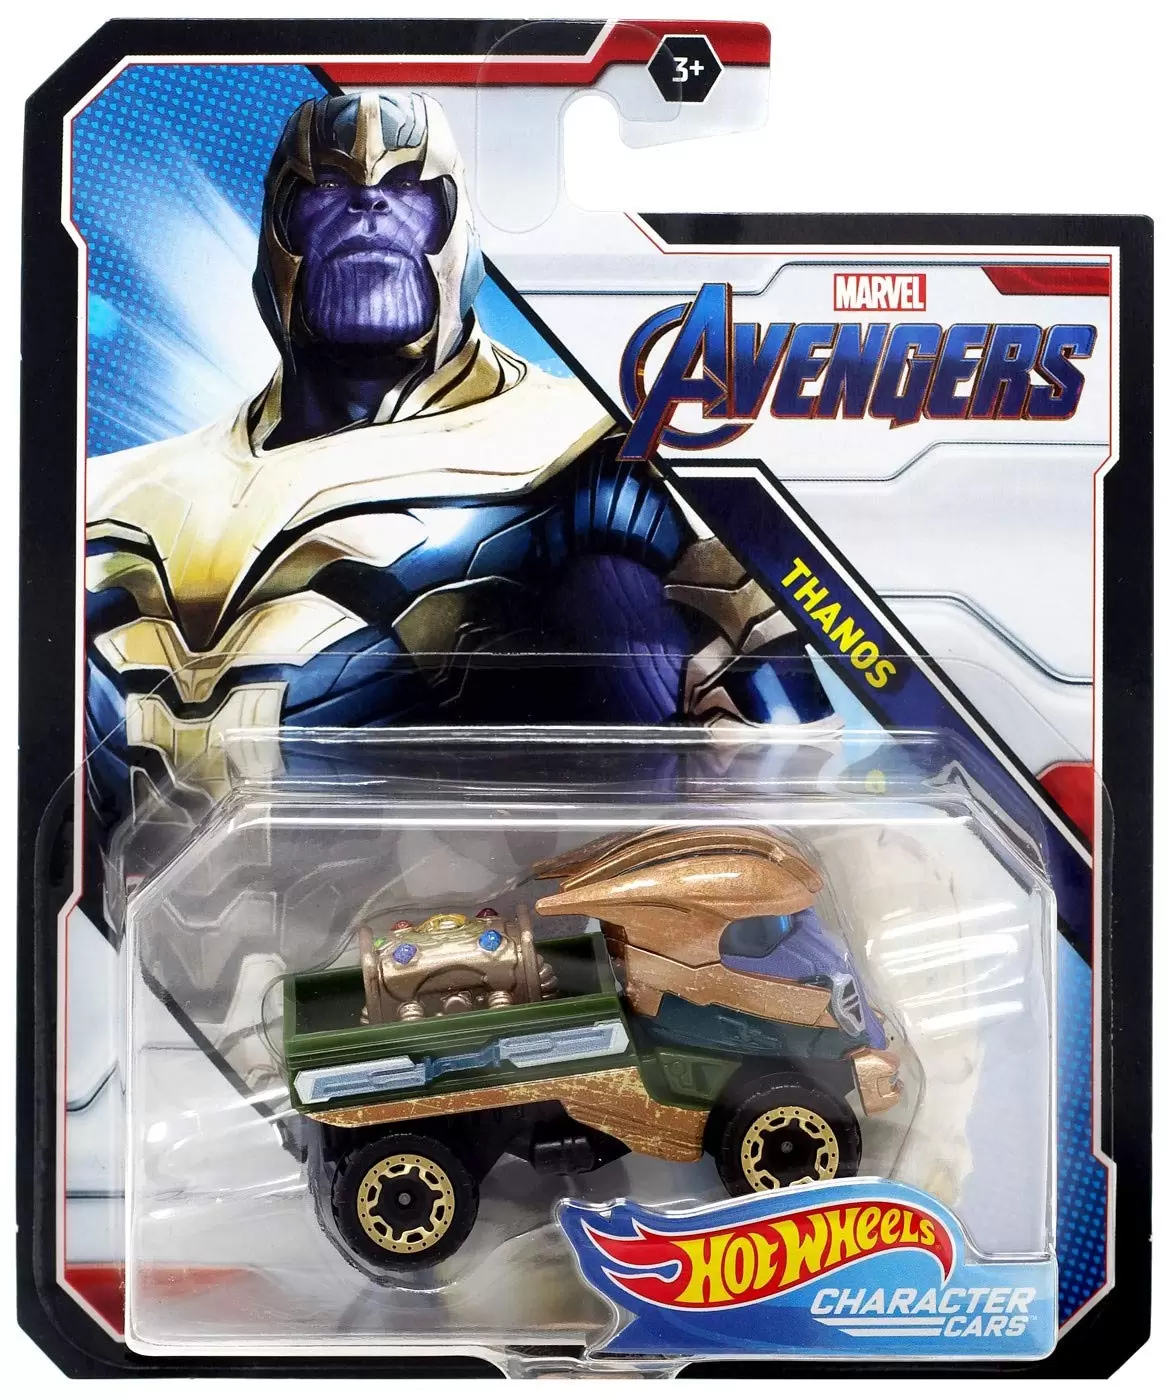 Marvel Character Cars - Avengers - Thanos